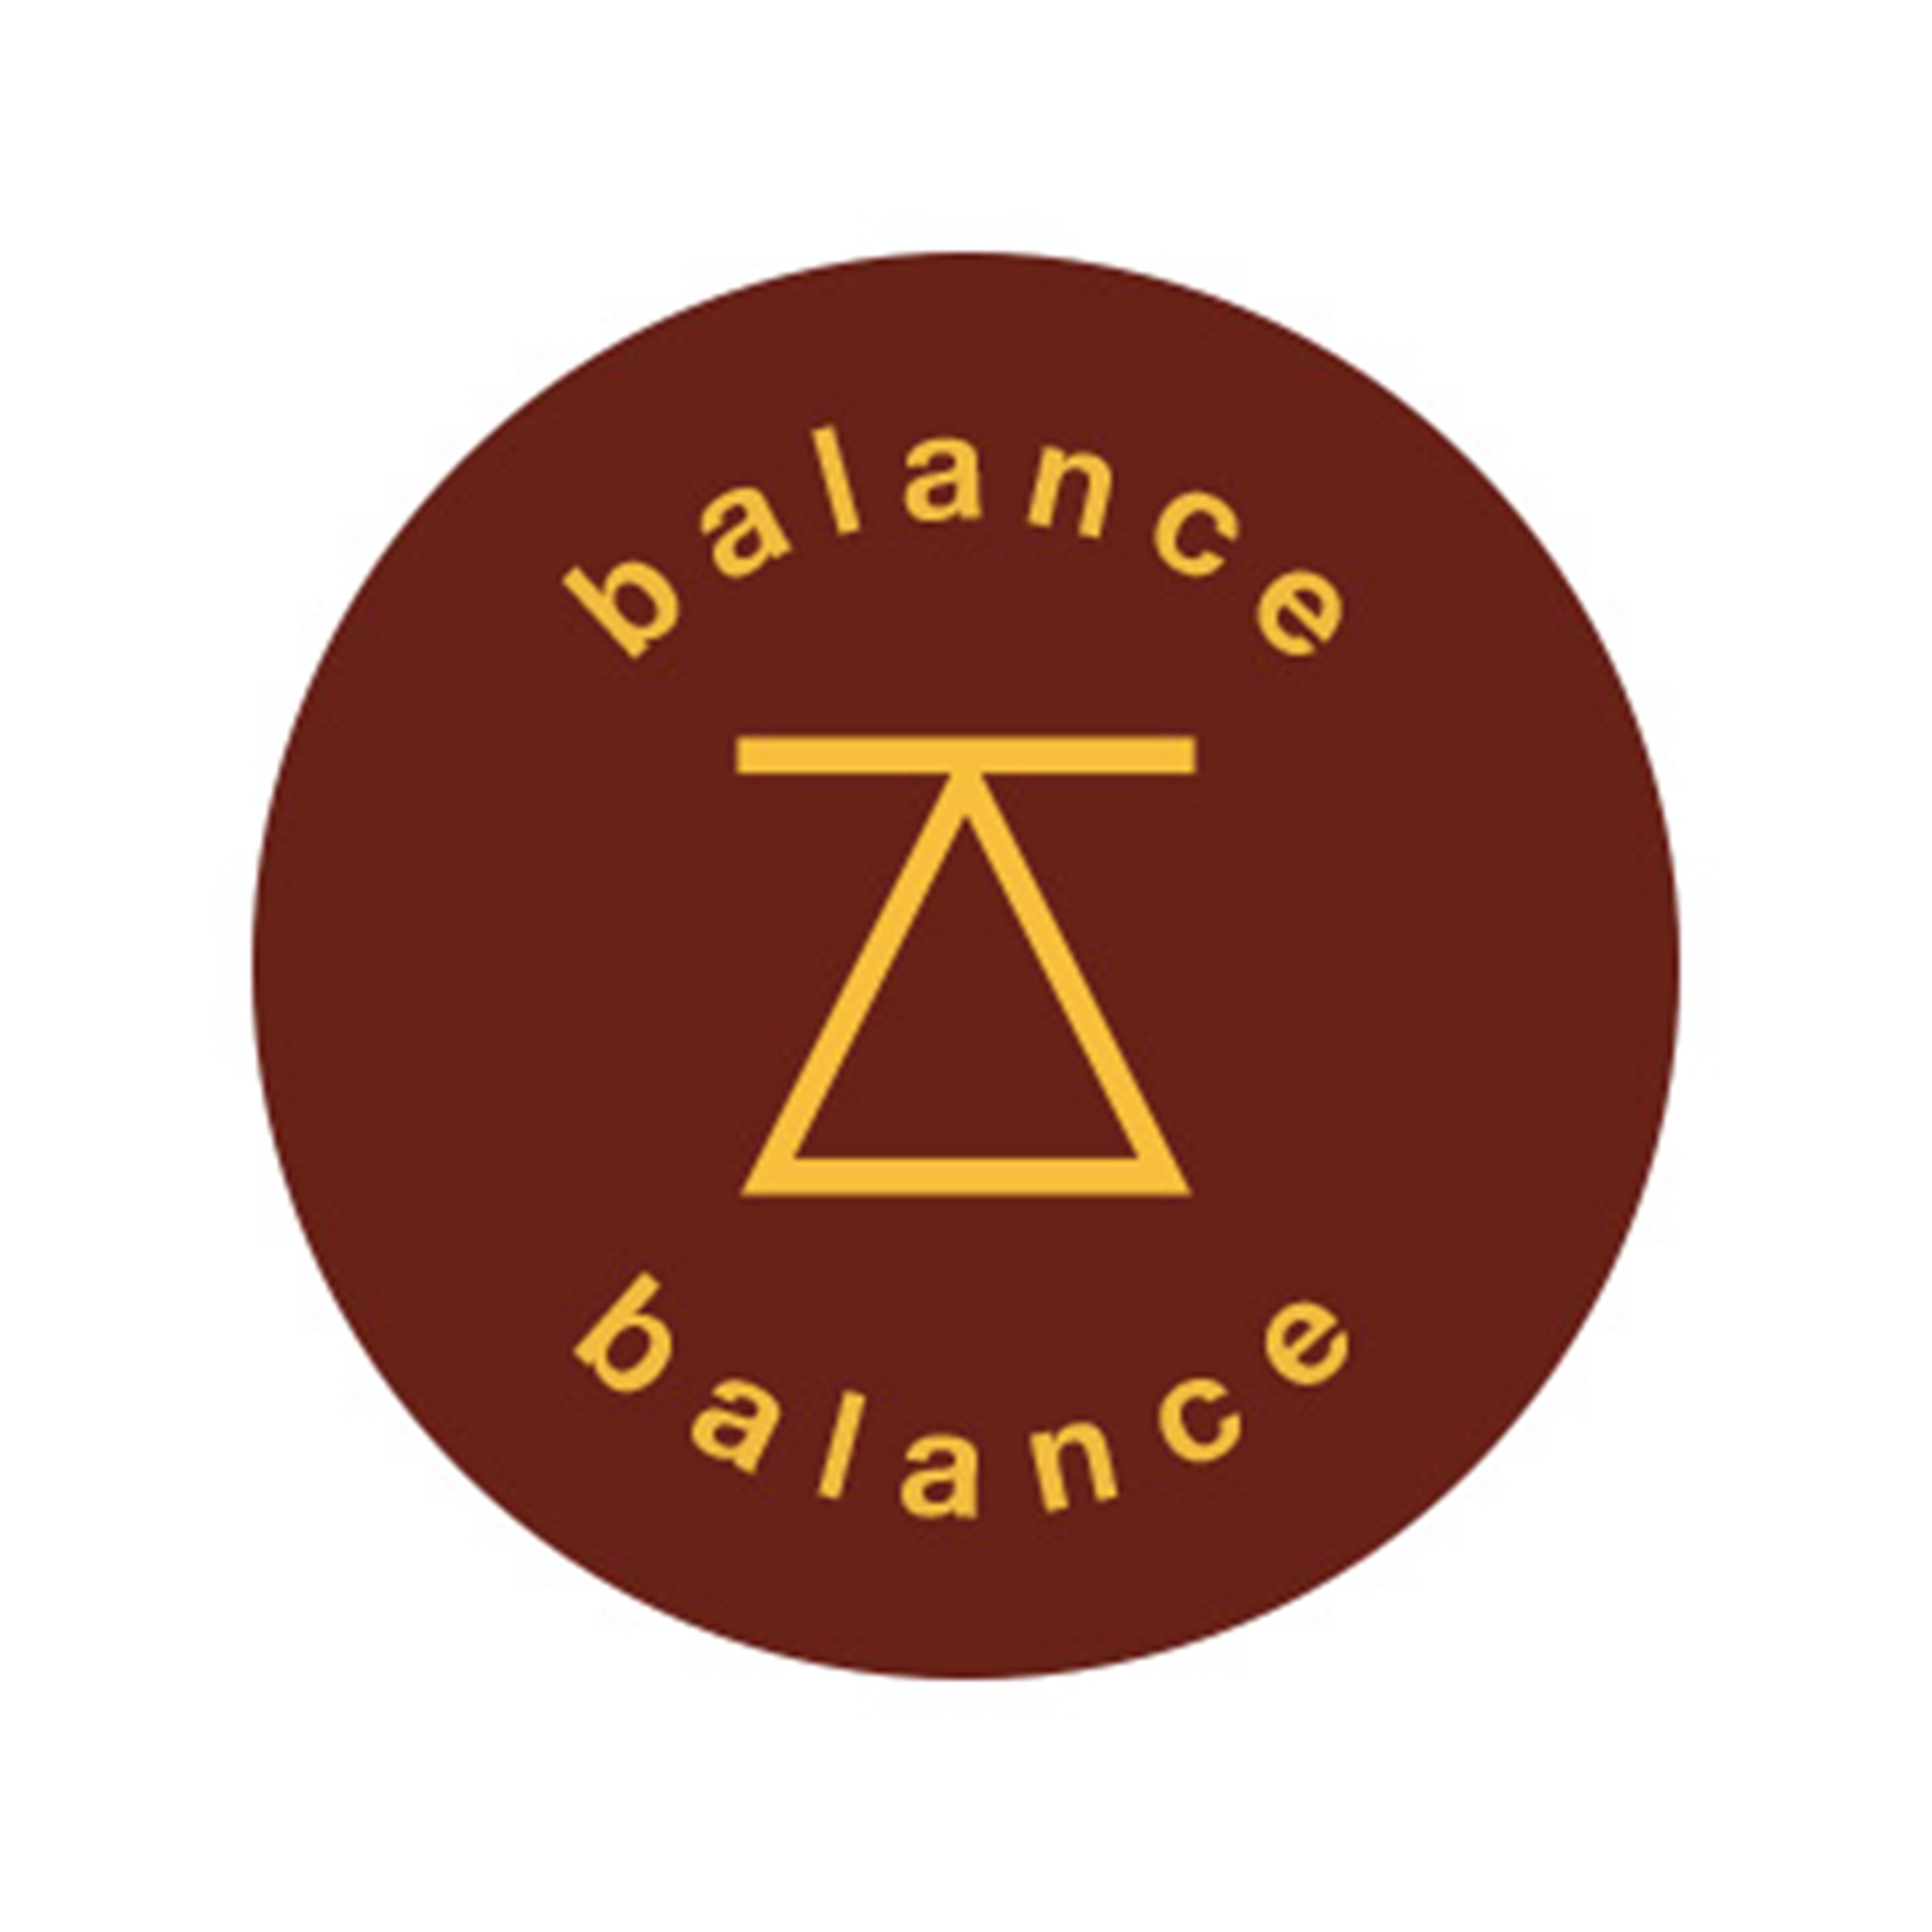 badge-balance.jpg